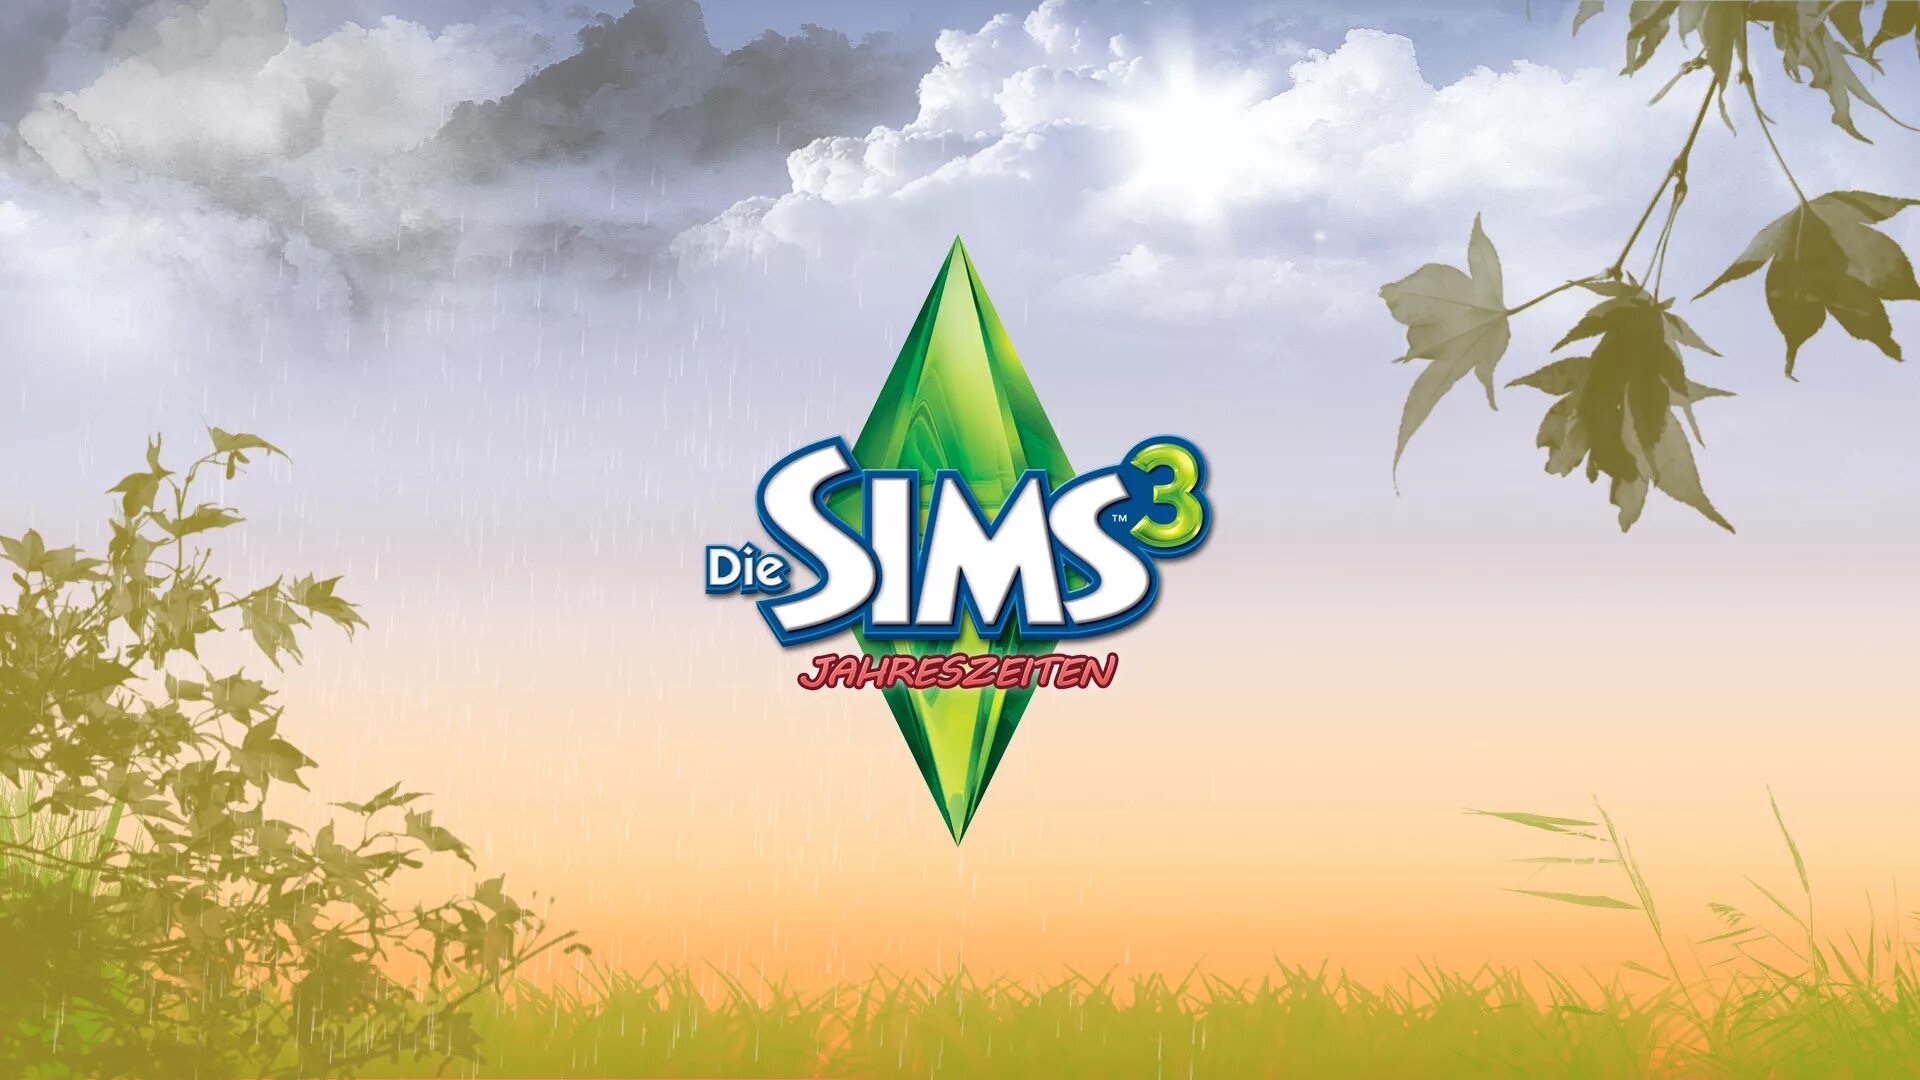 Games sim ru. The SIMS 3 логотип. Симс 3 фон. Симс 3 заставка. Симс 3 значок.